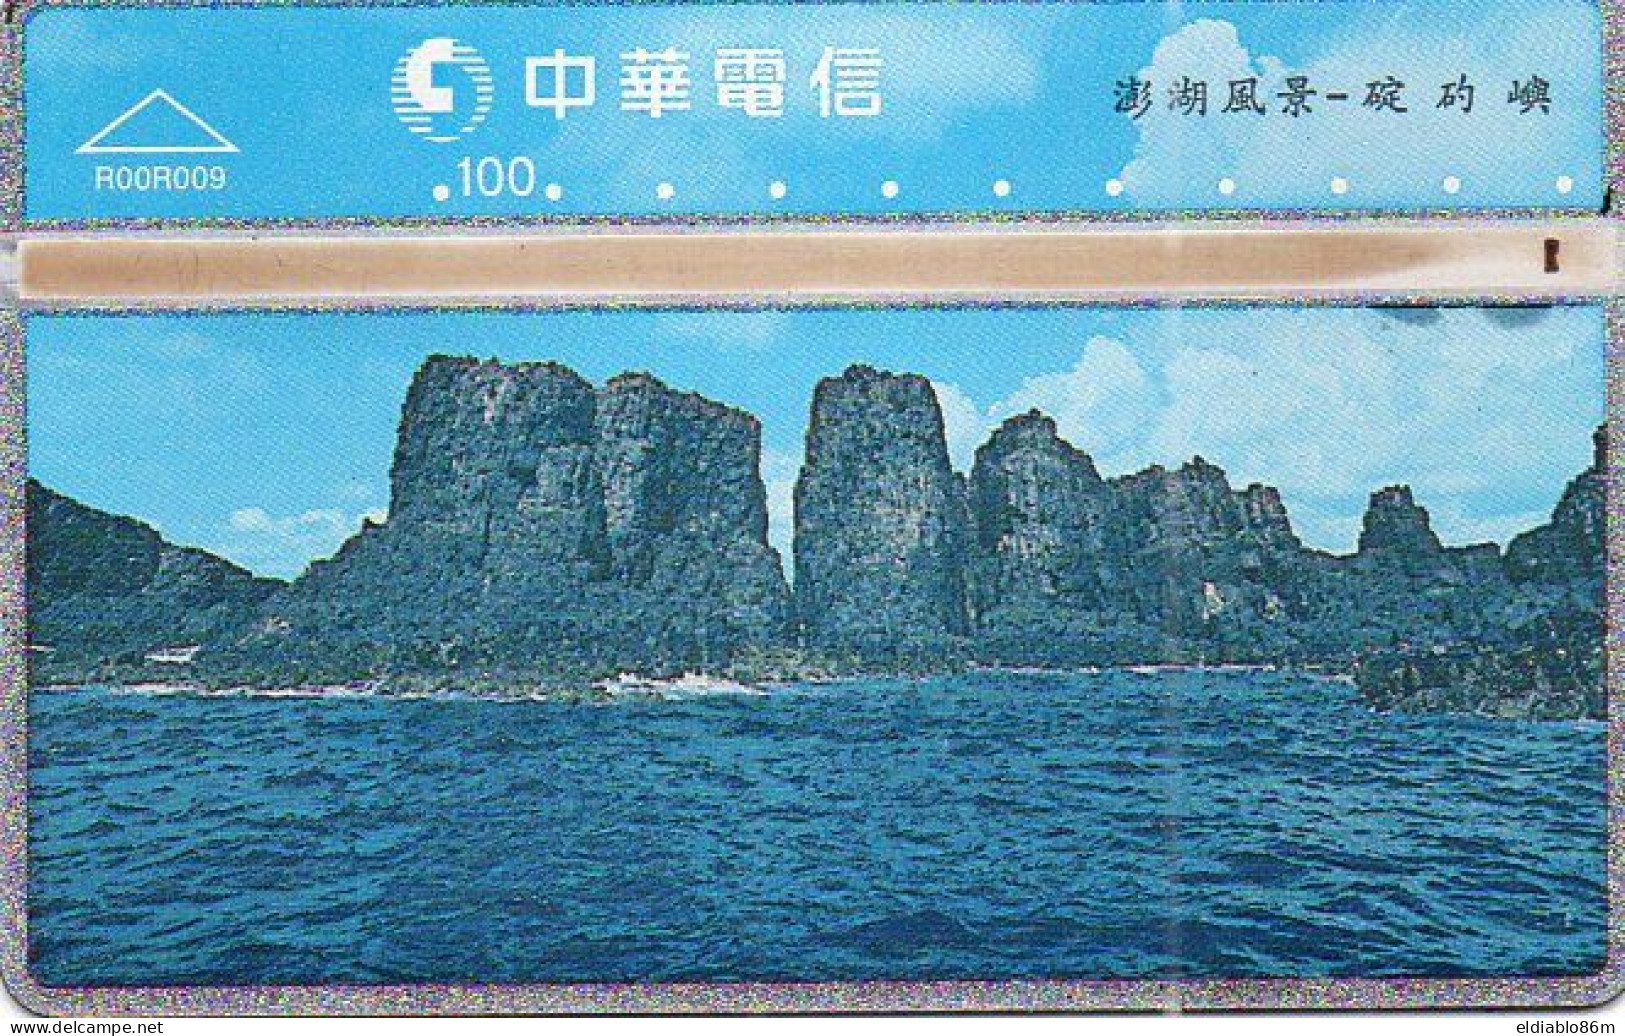 TAIWAN - L&G - CHUNGWA - R00R009 - VIEW OF PEUN HOO - 014E - Taiwán (Formosa)